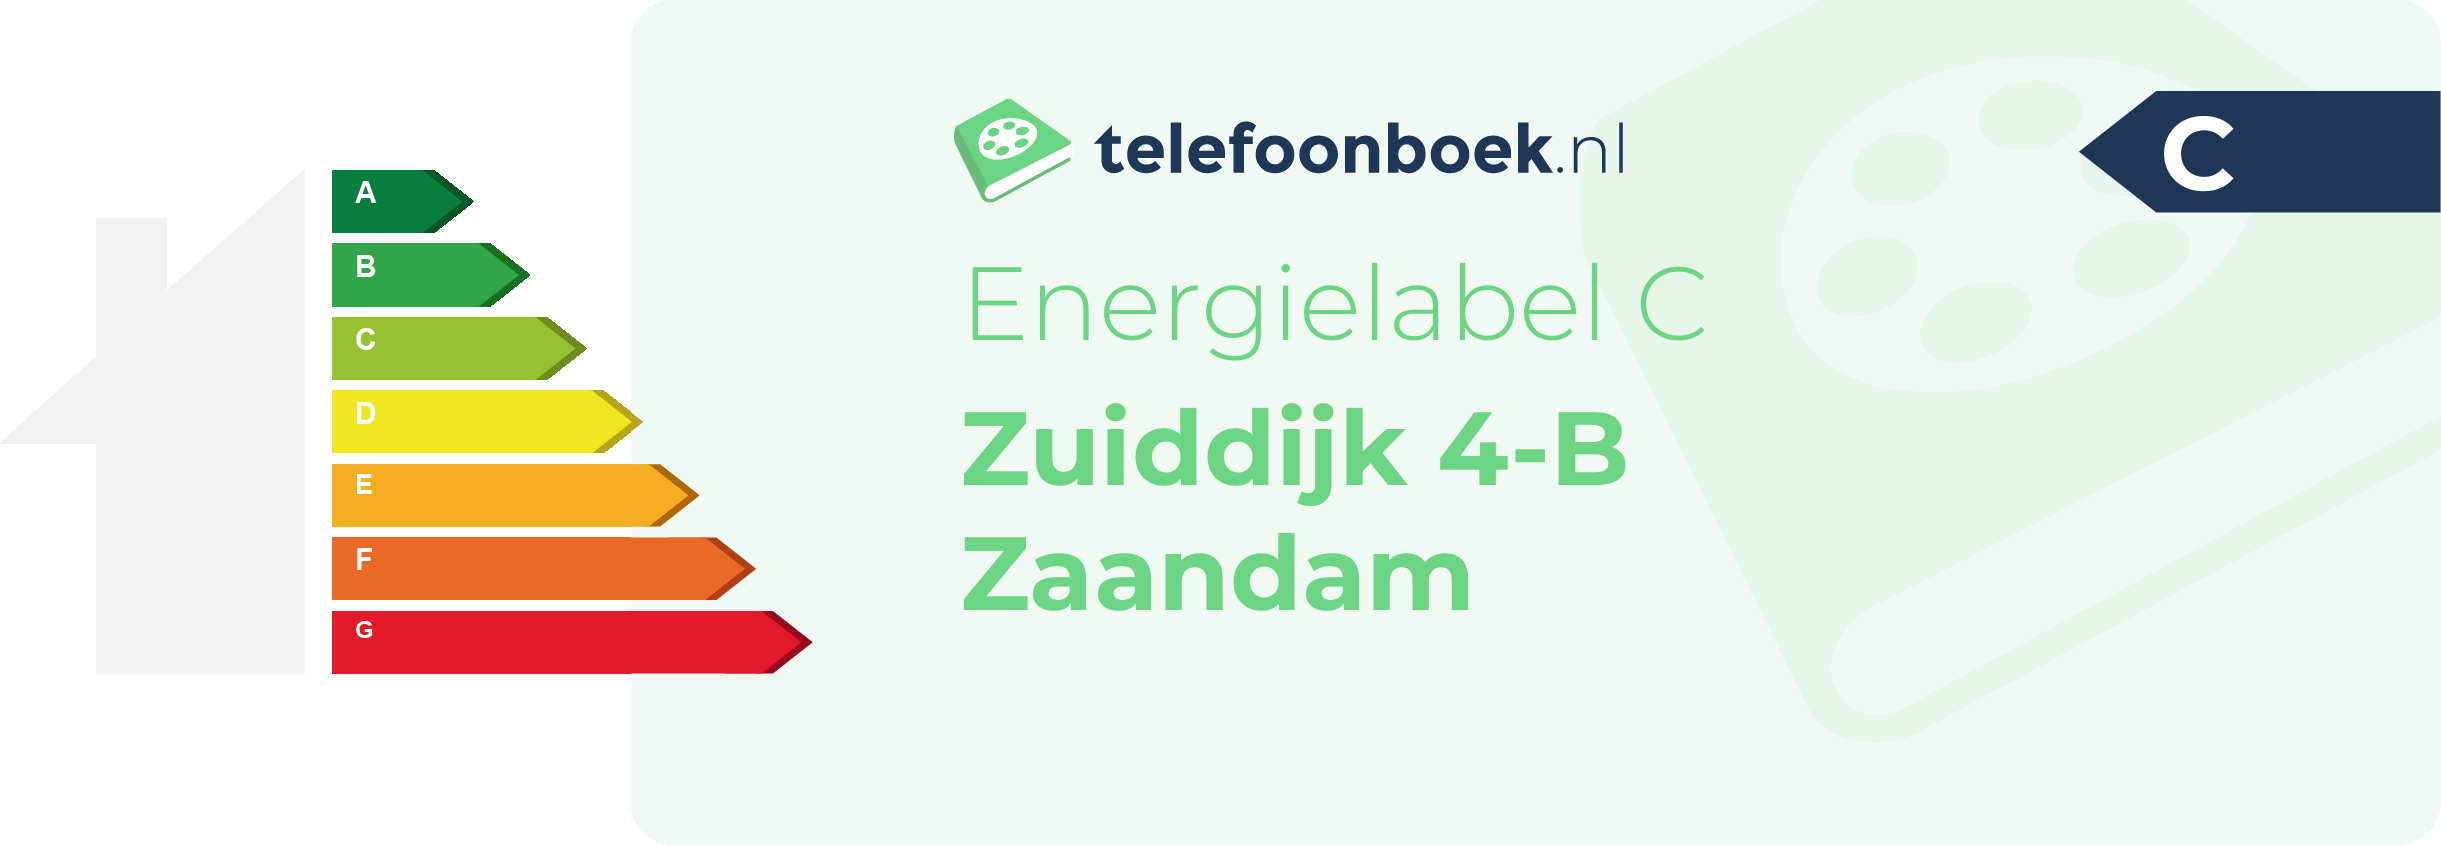 Energielabel Zuiddijk 4-B Zaandam